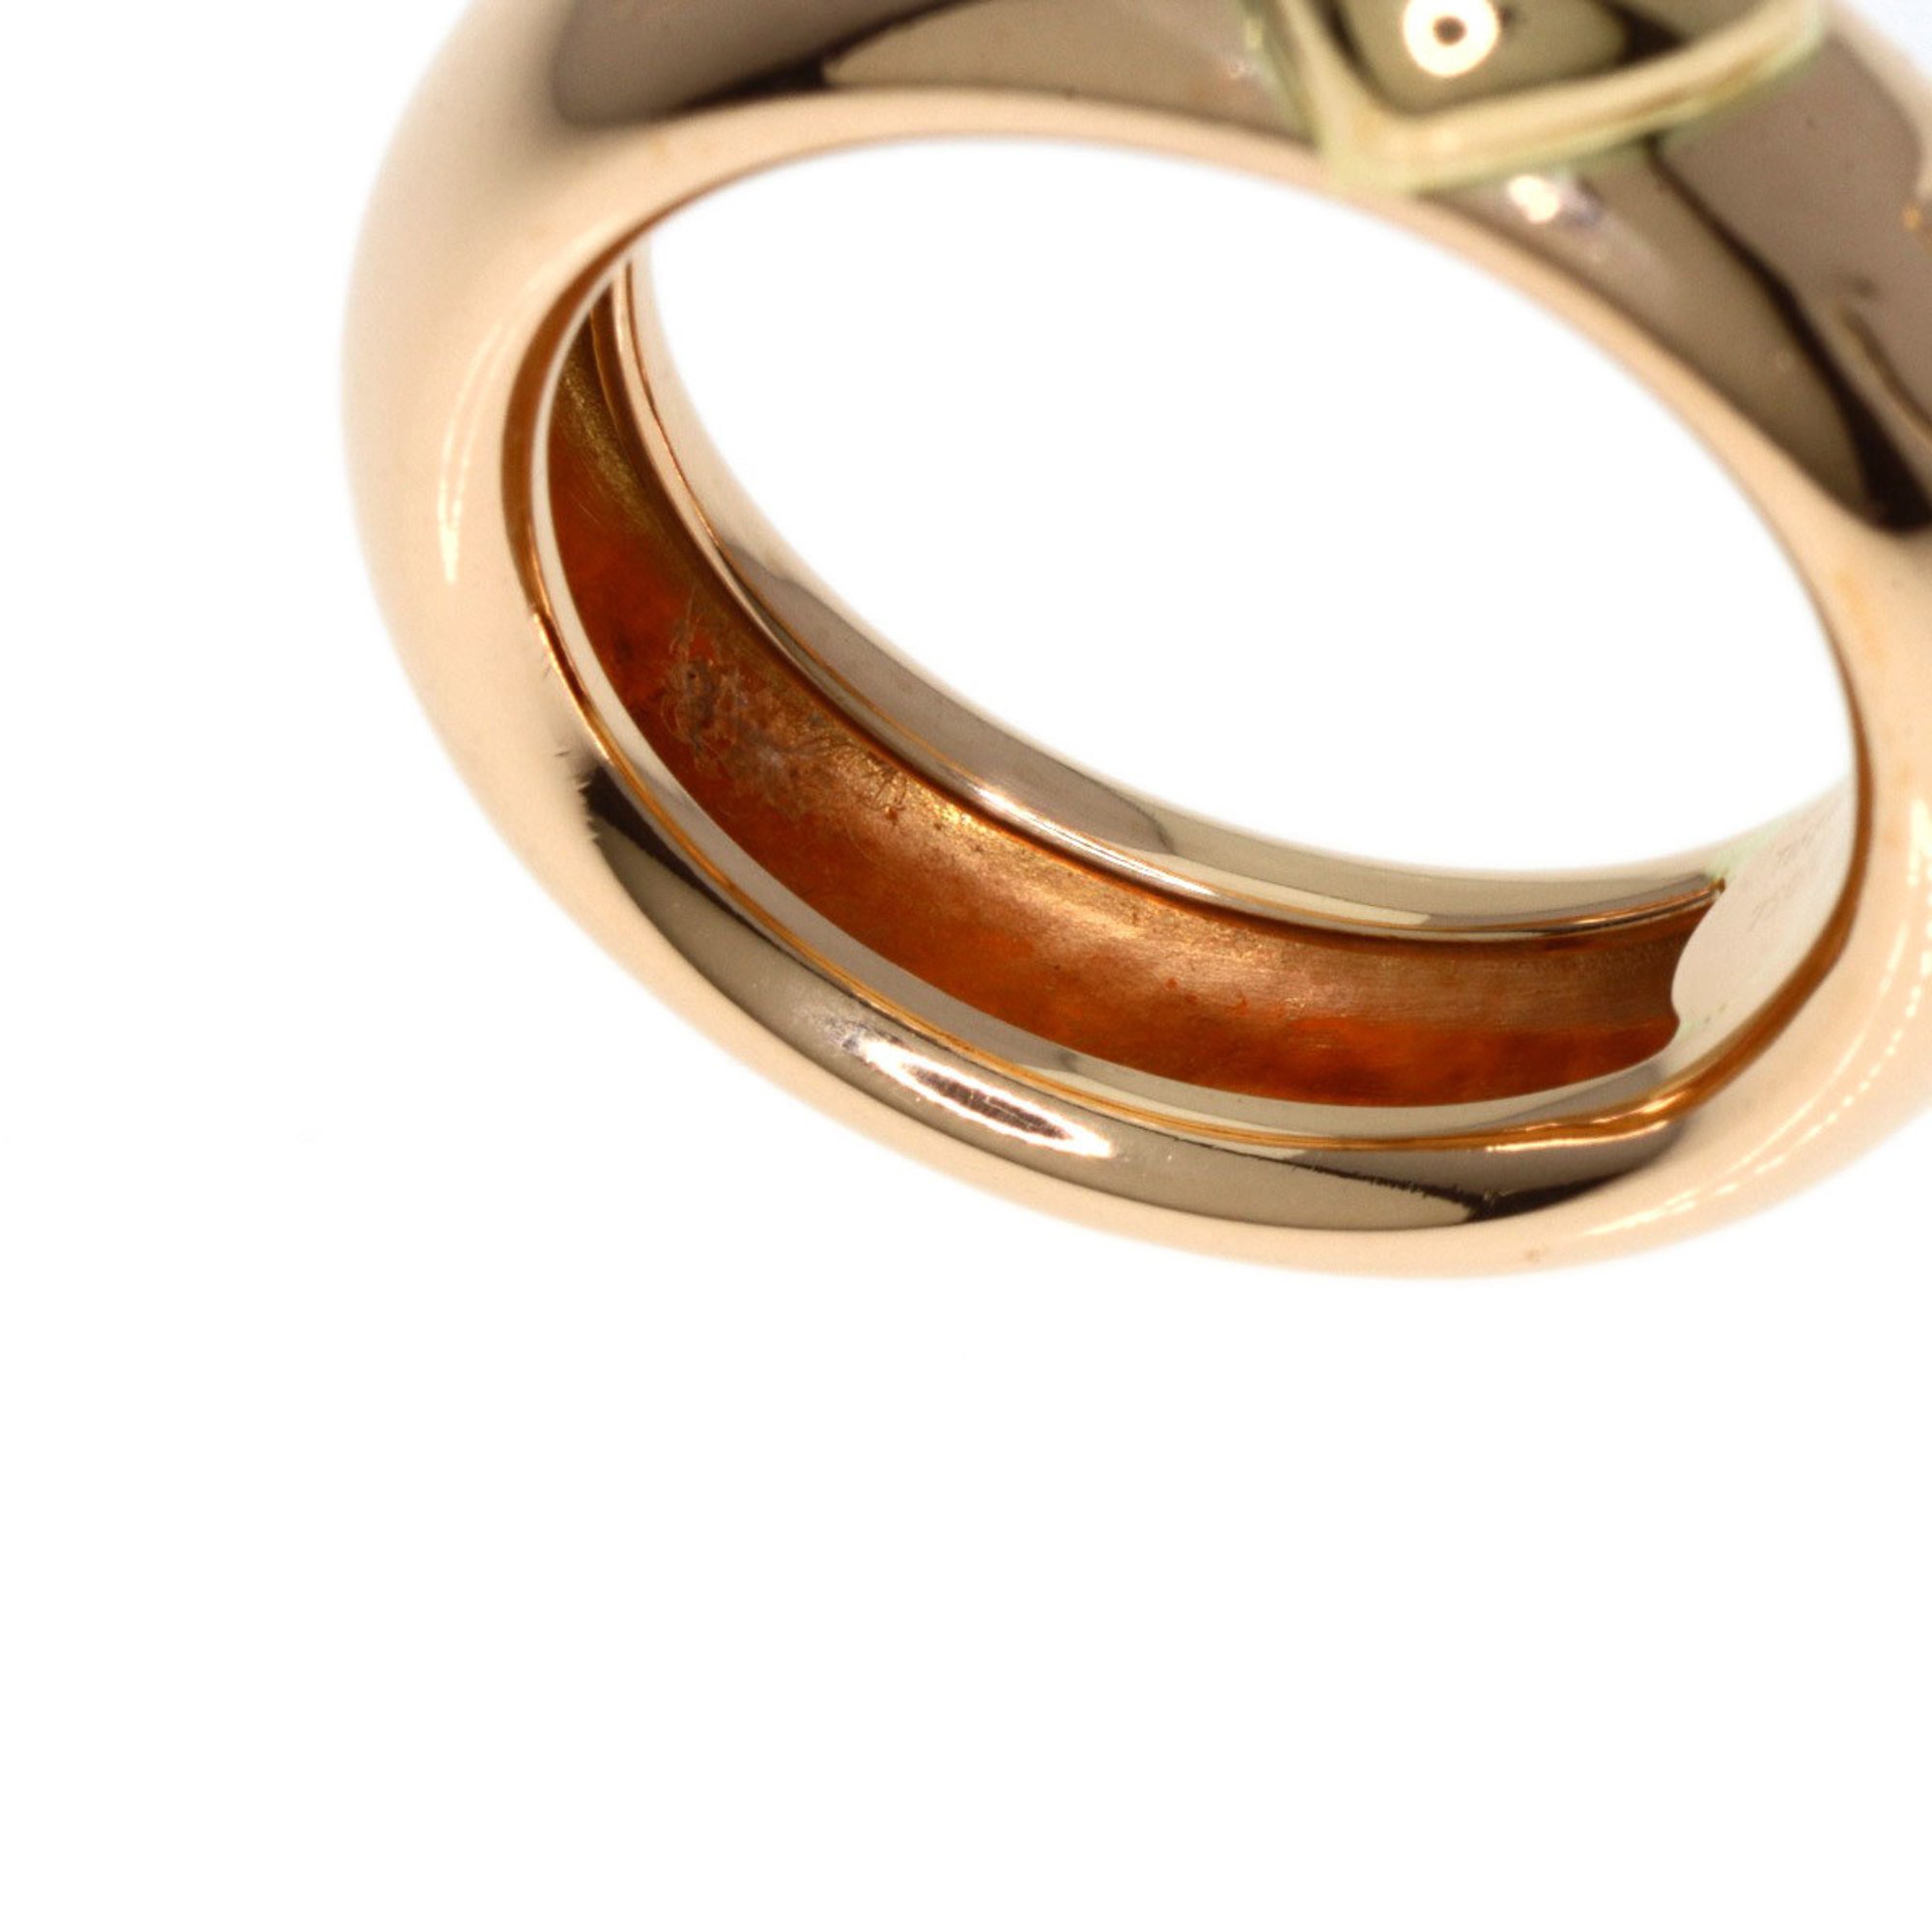 Tiffany Friendship Ring, 18K Yellow Gold, Women's